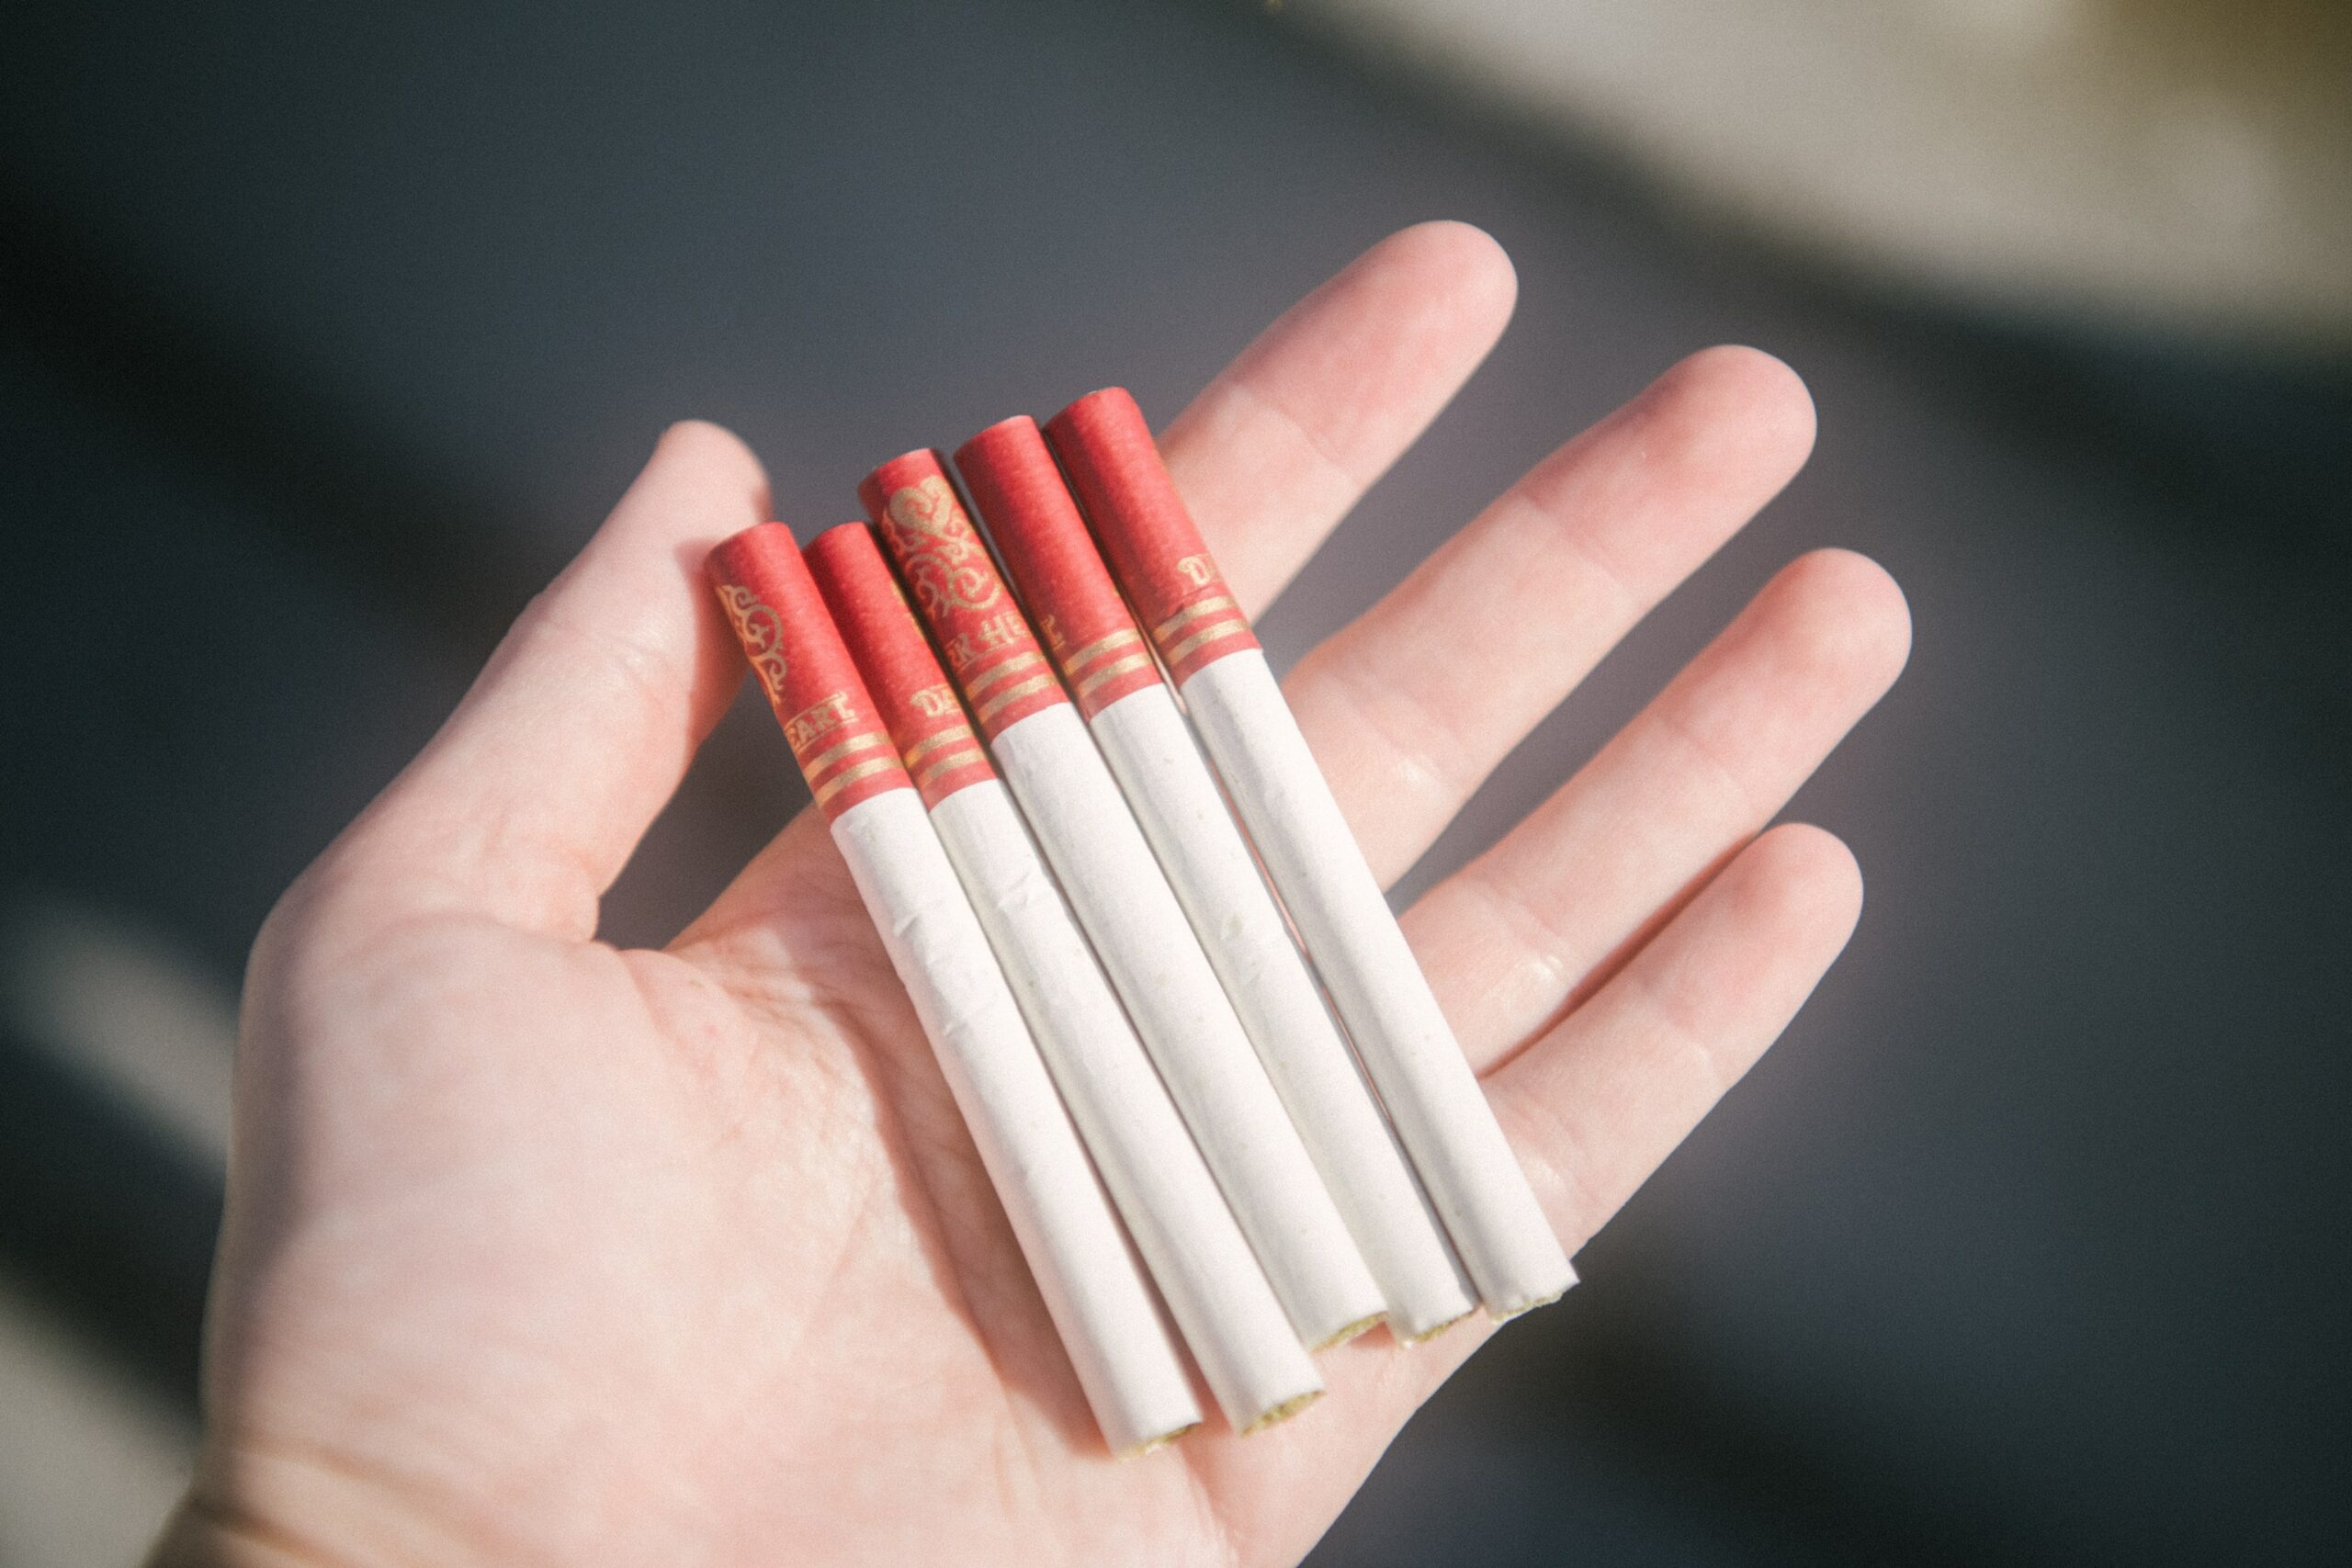 Polish authorities seize 21.5 million illegal cigarettes